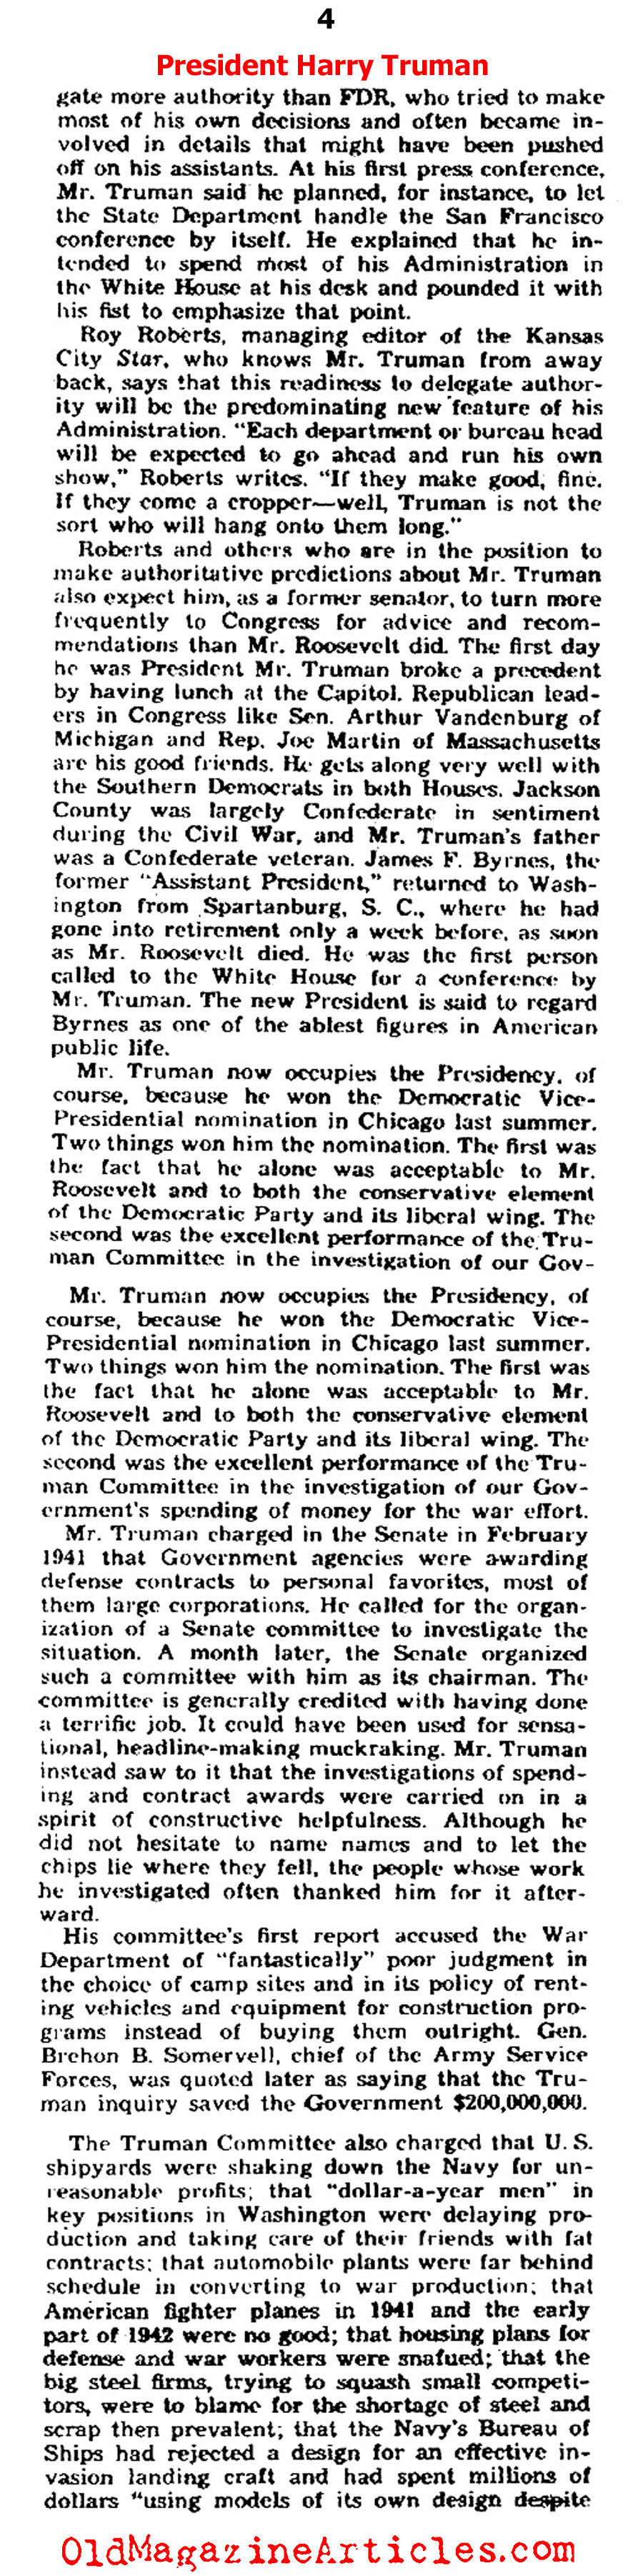 The New Commander-in-Chief: Harry S Truman (Yank Magazine, 1945)